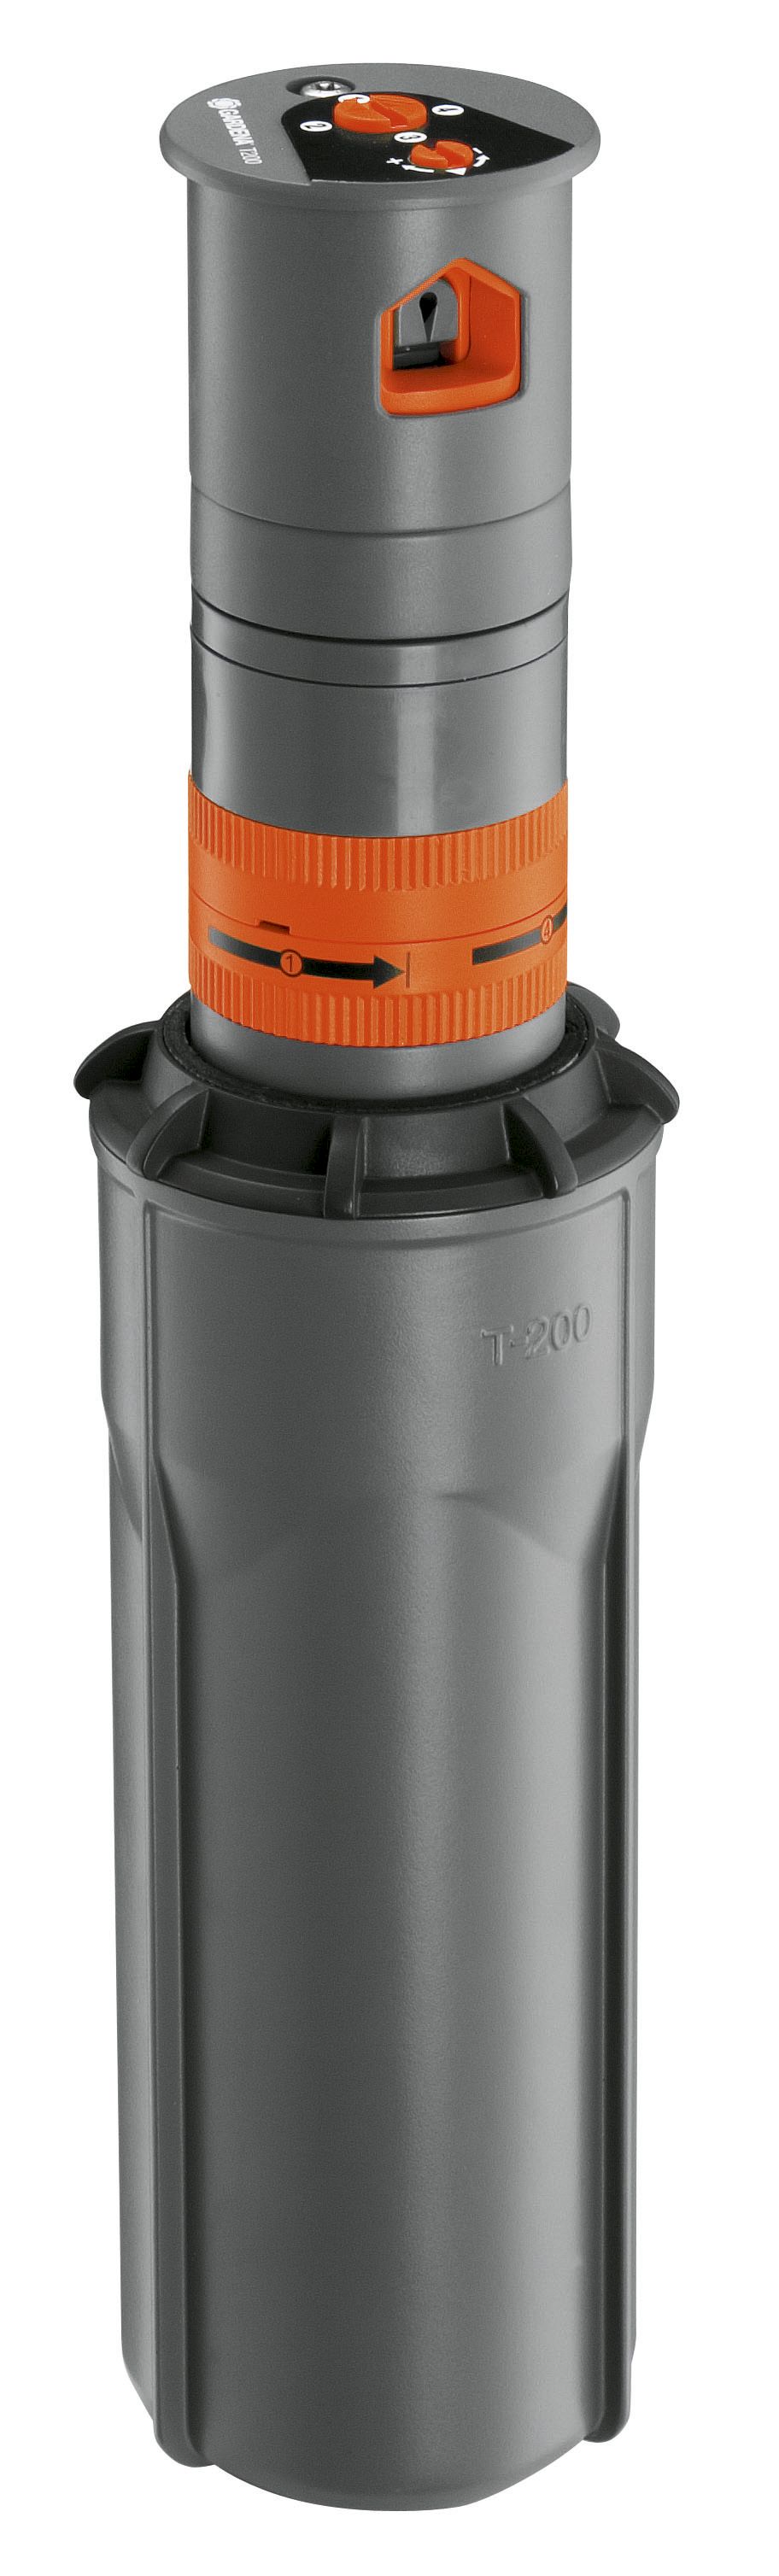 Turbo-driven Pop-up Sprinkler T 200